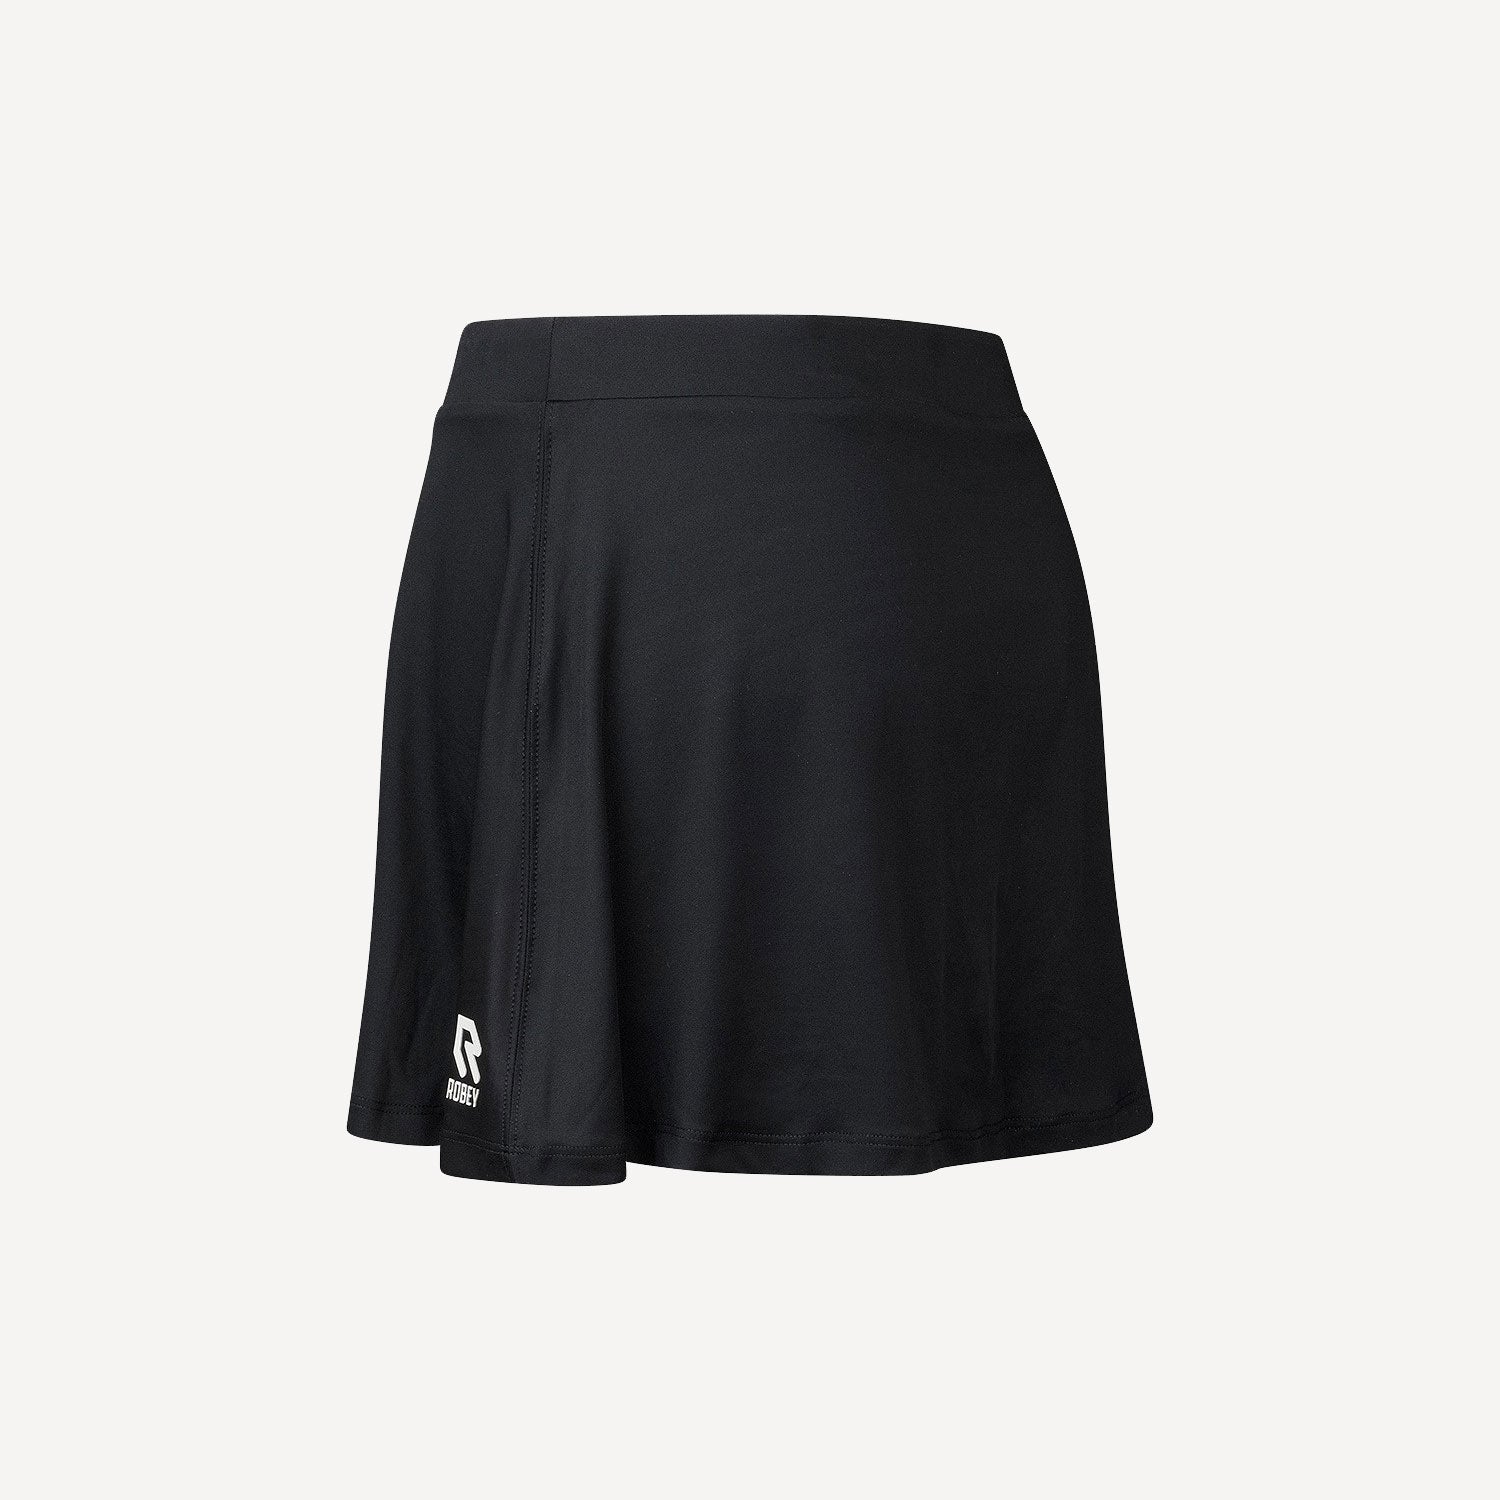 Robey Ralley Women's Tennis Skirt - Black (4)